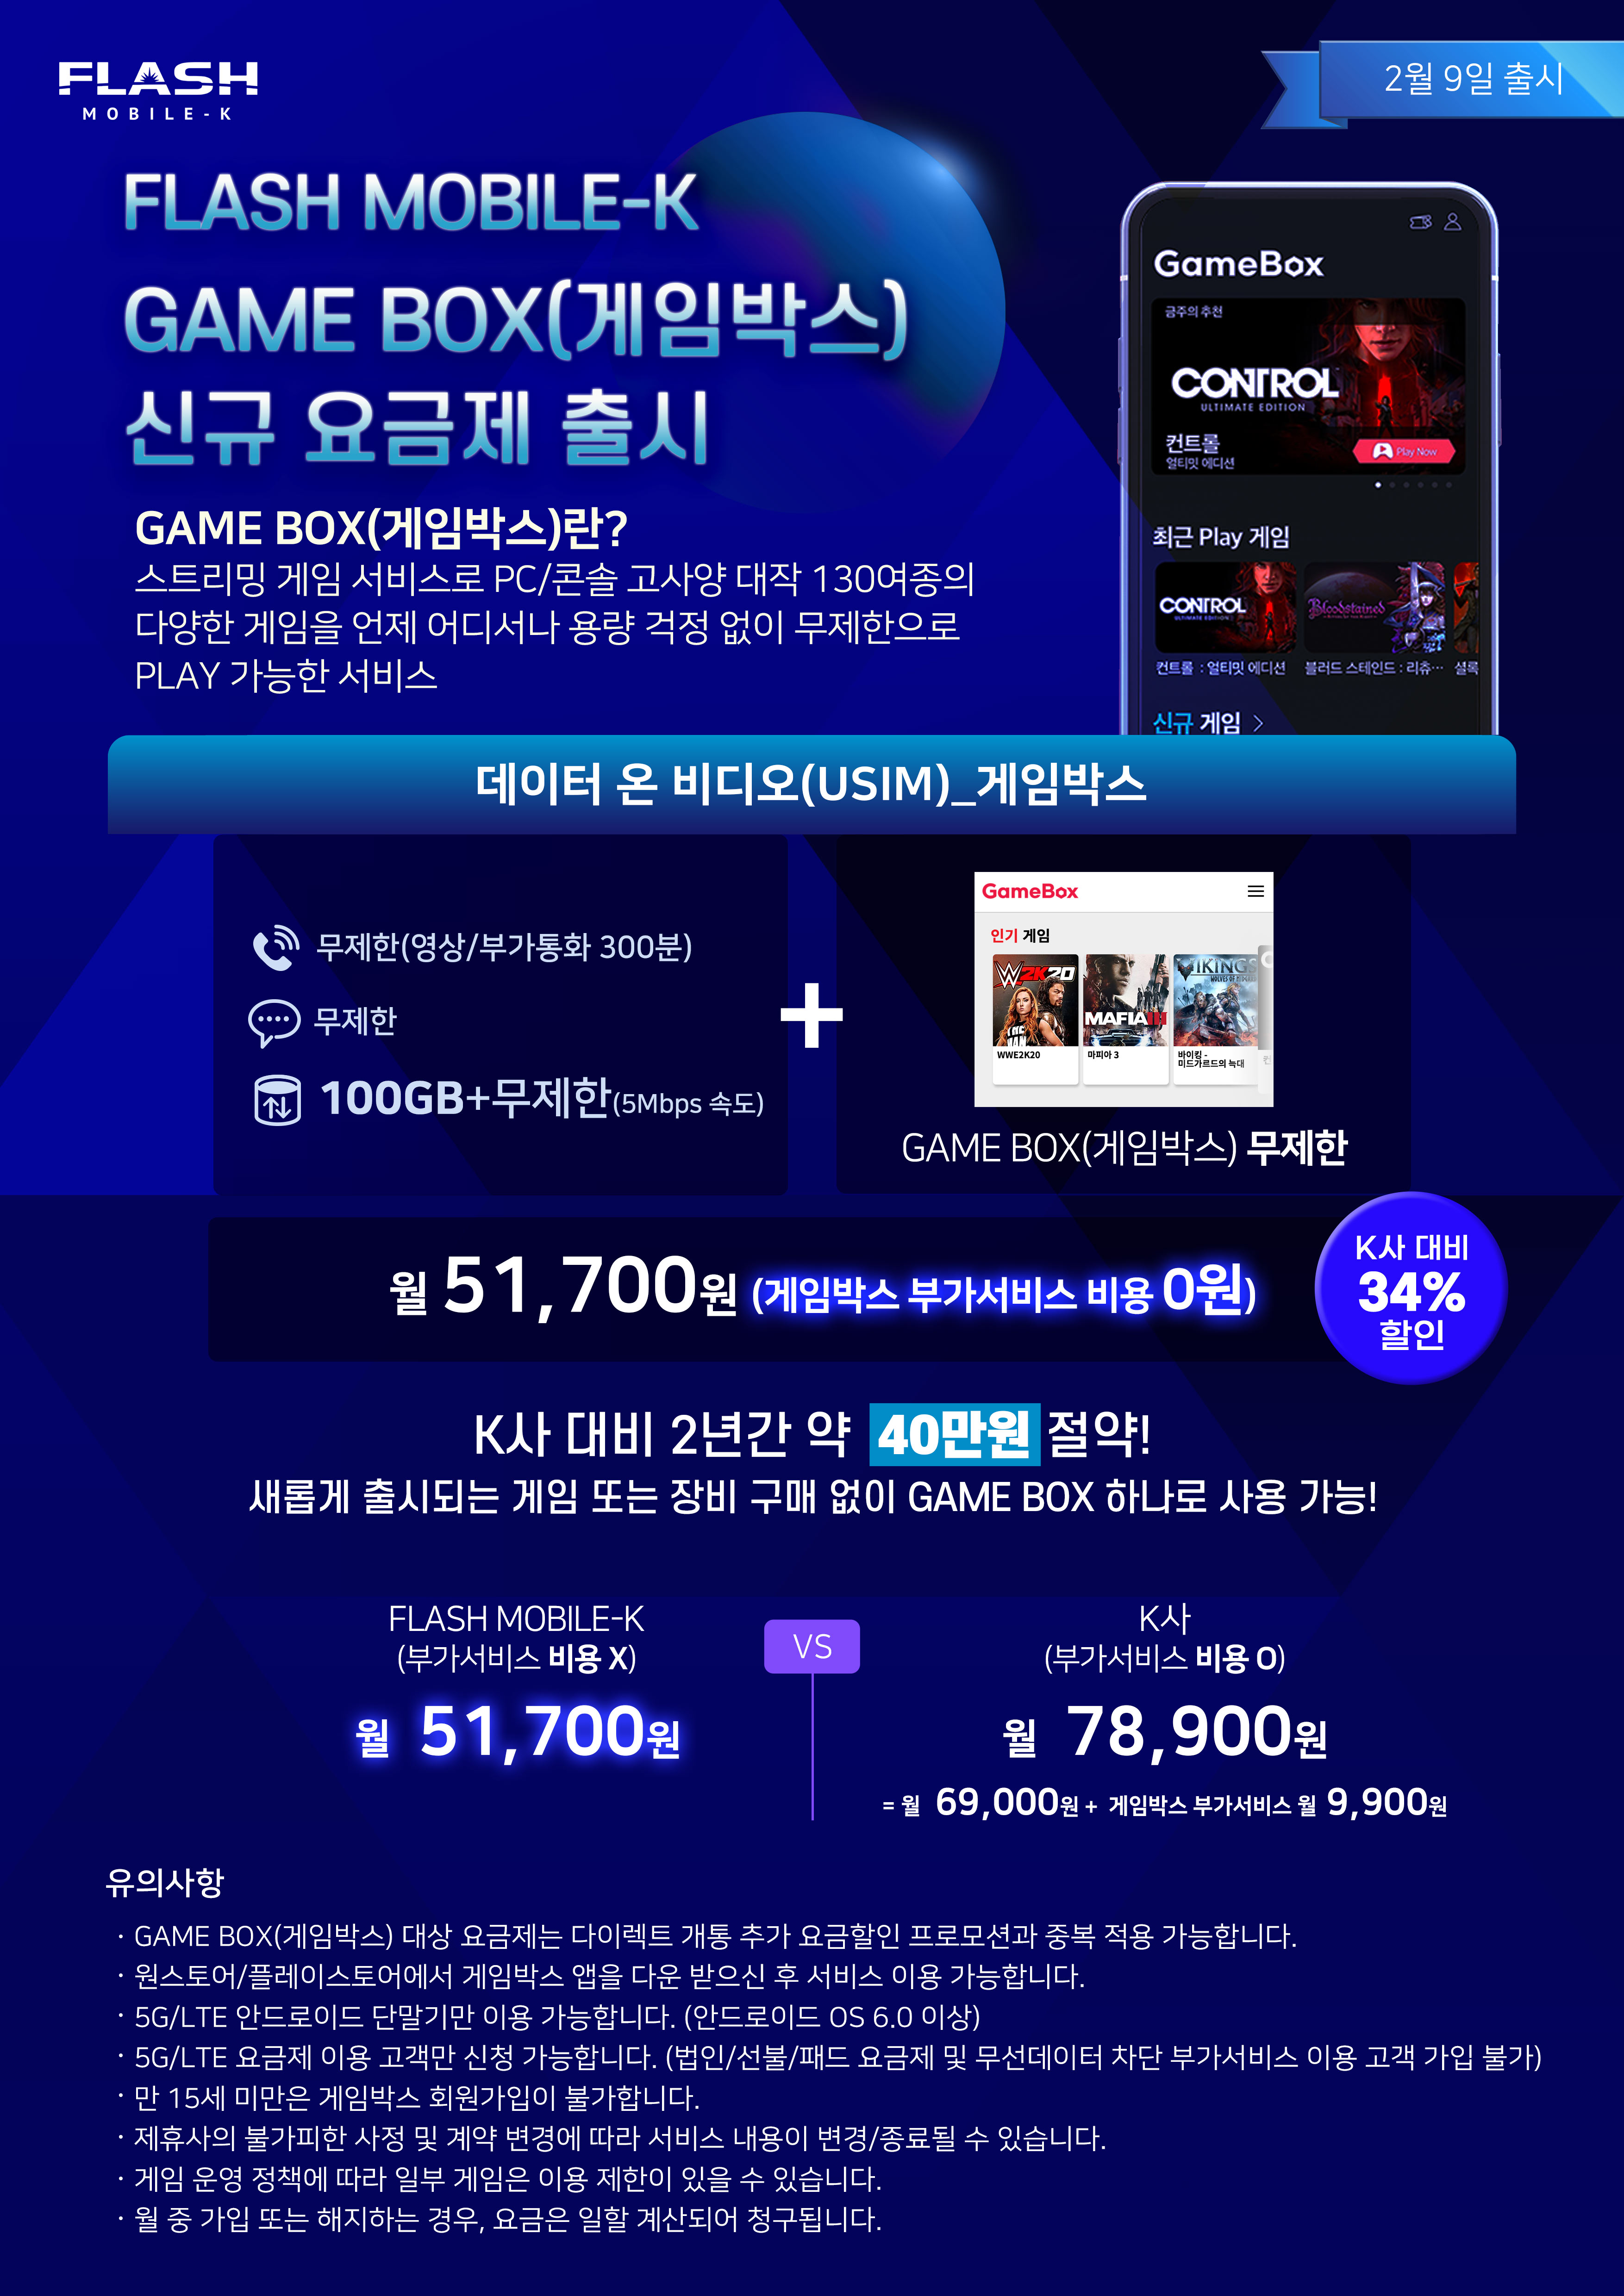 FLASH MOBILE-K 게임박스 신규 요금제 출시